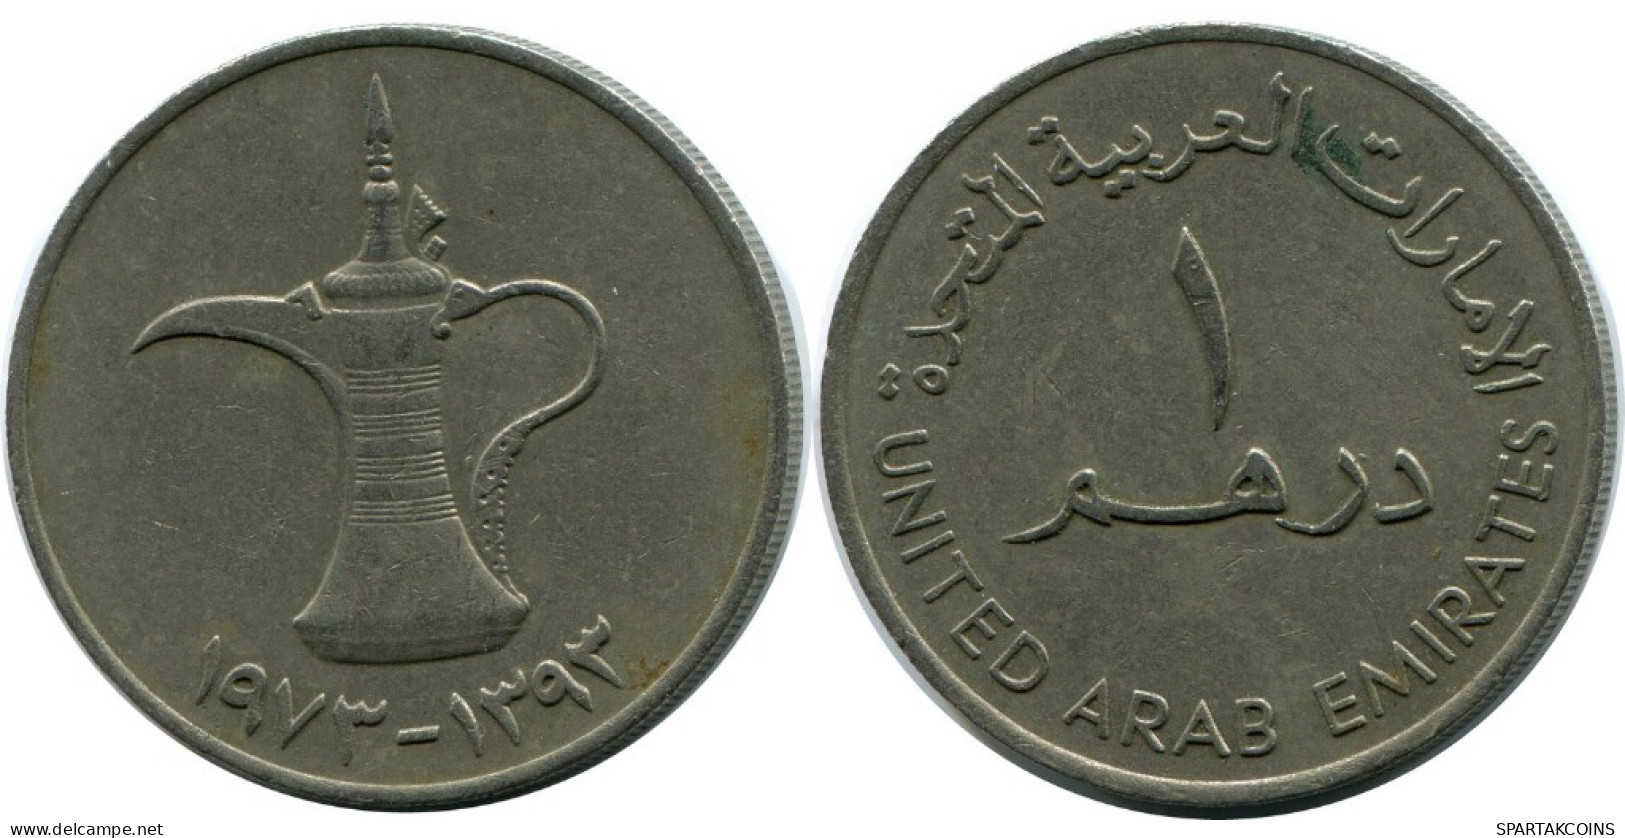 1 DIRHAM 1973 UAE UNITED ARAB EMIRATES Islamic Coin #AH990.U.A - Ver. Arab. Emirate